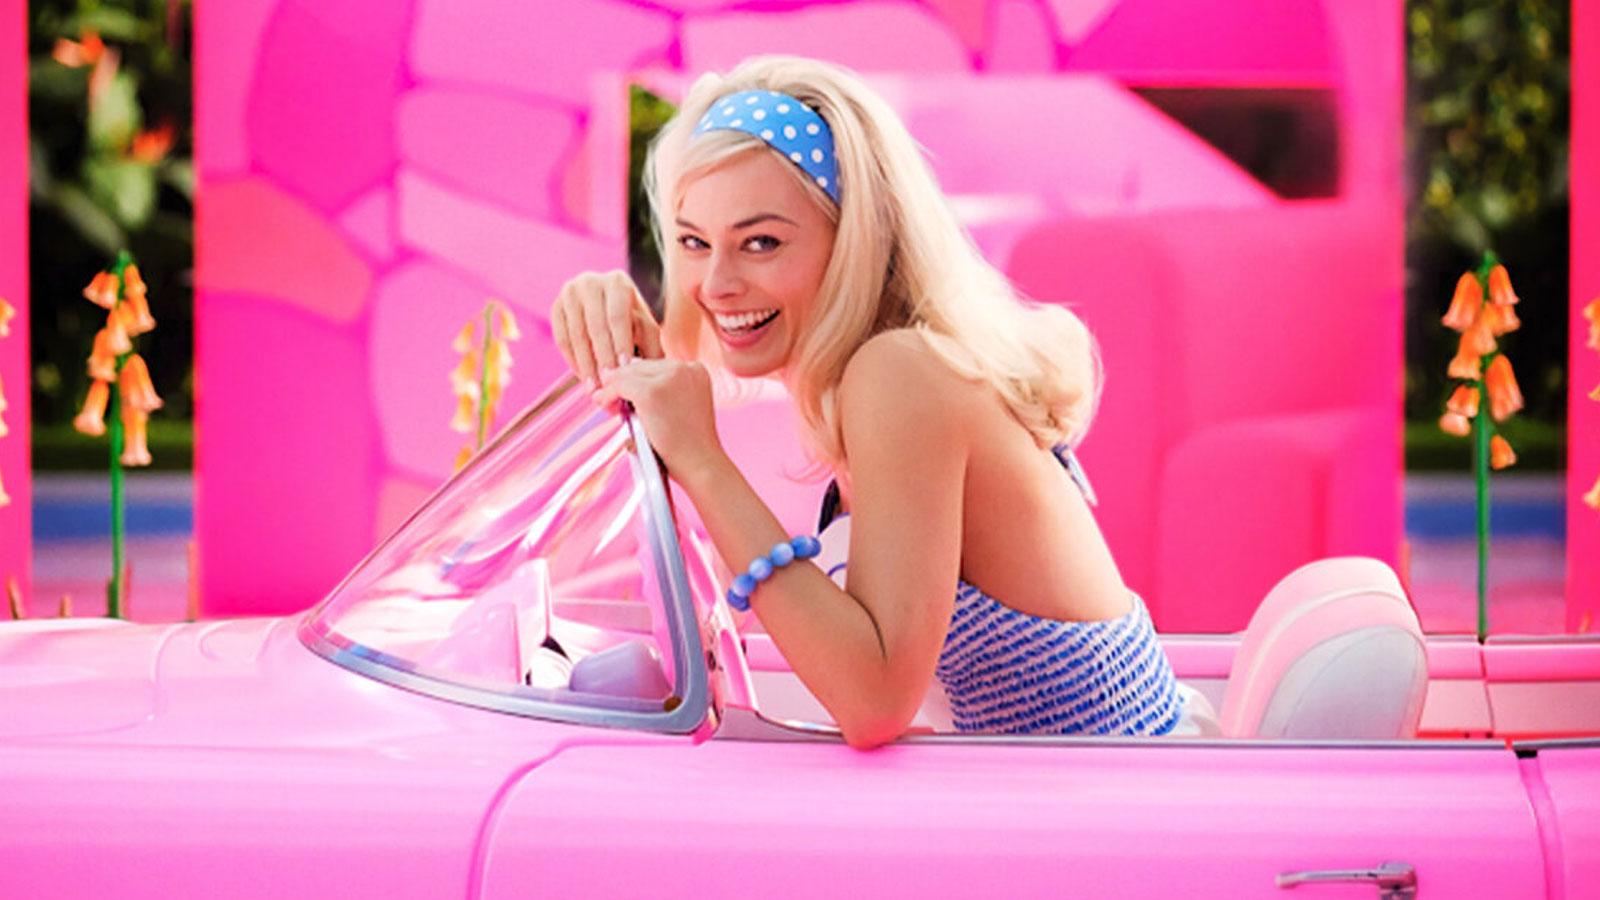 Scene from the film Barbie